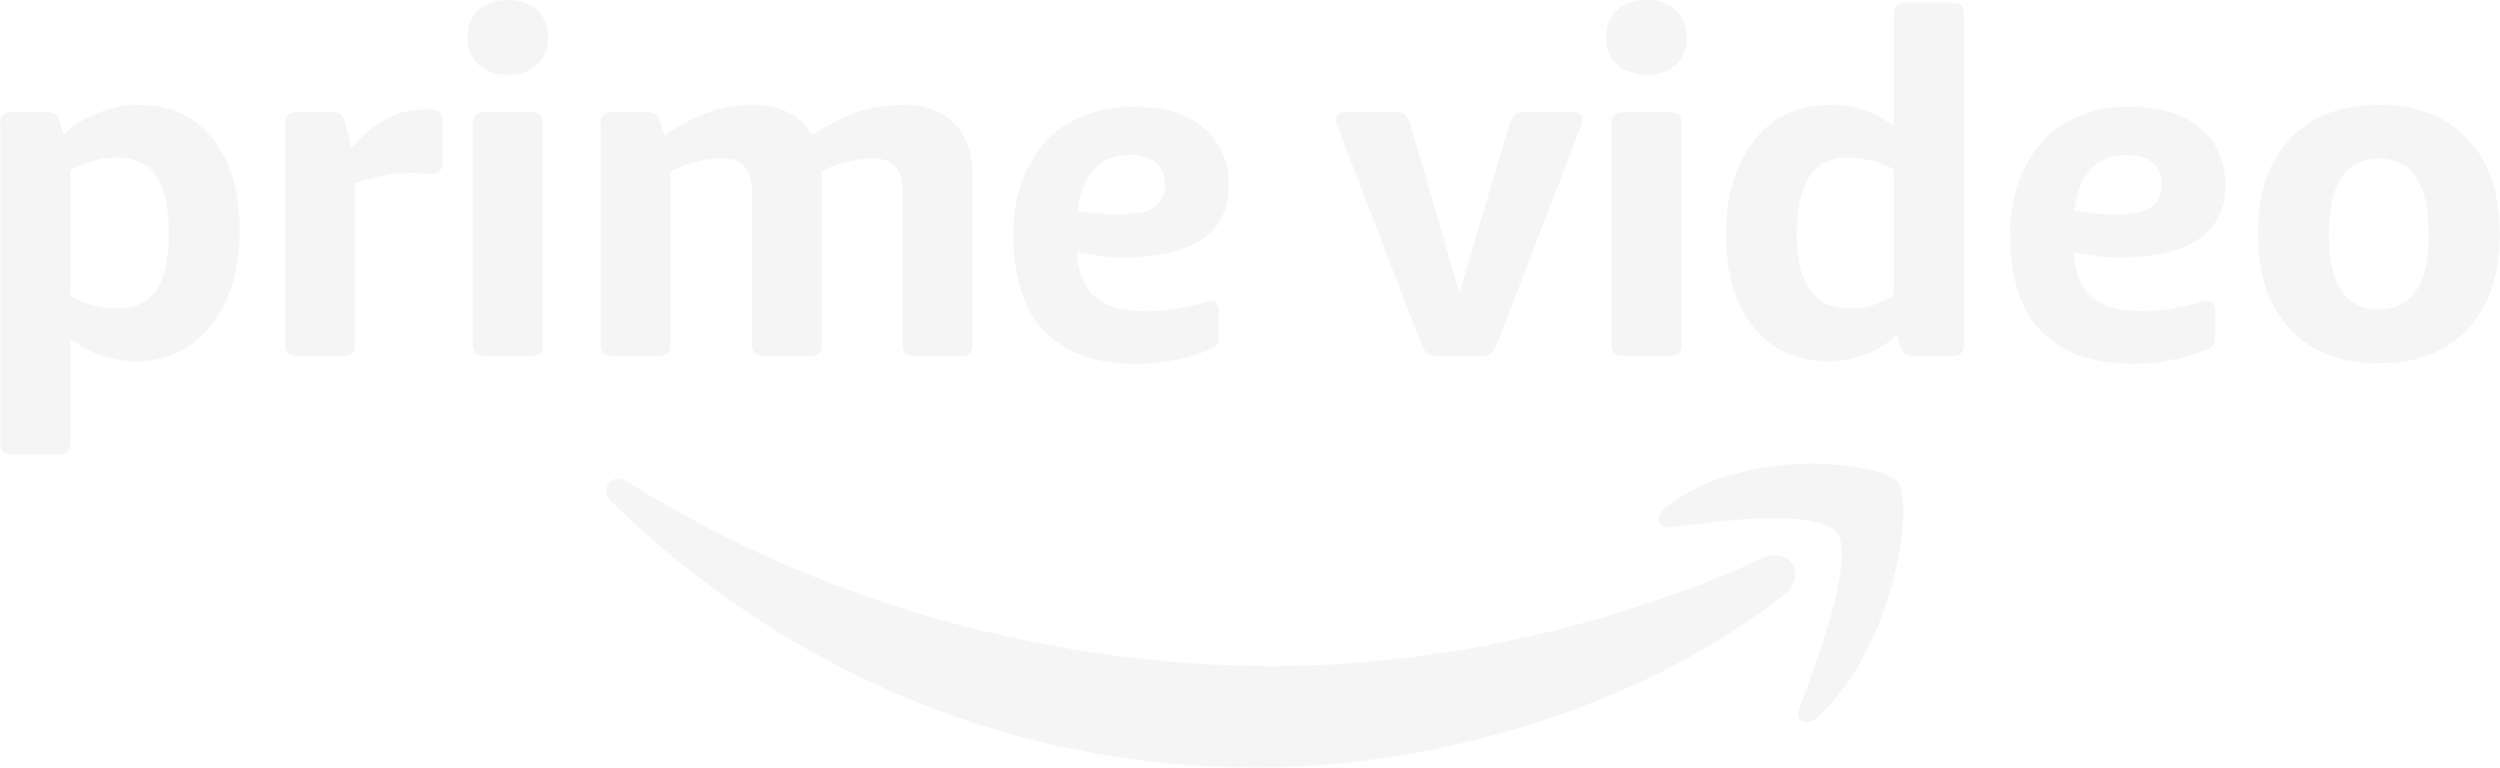 Prime_Video_Logo.png